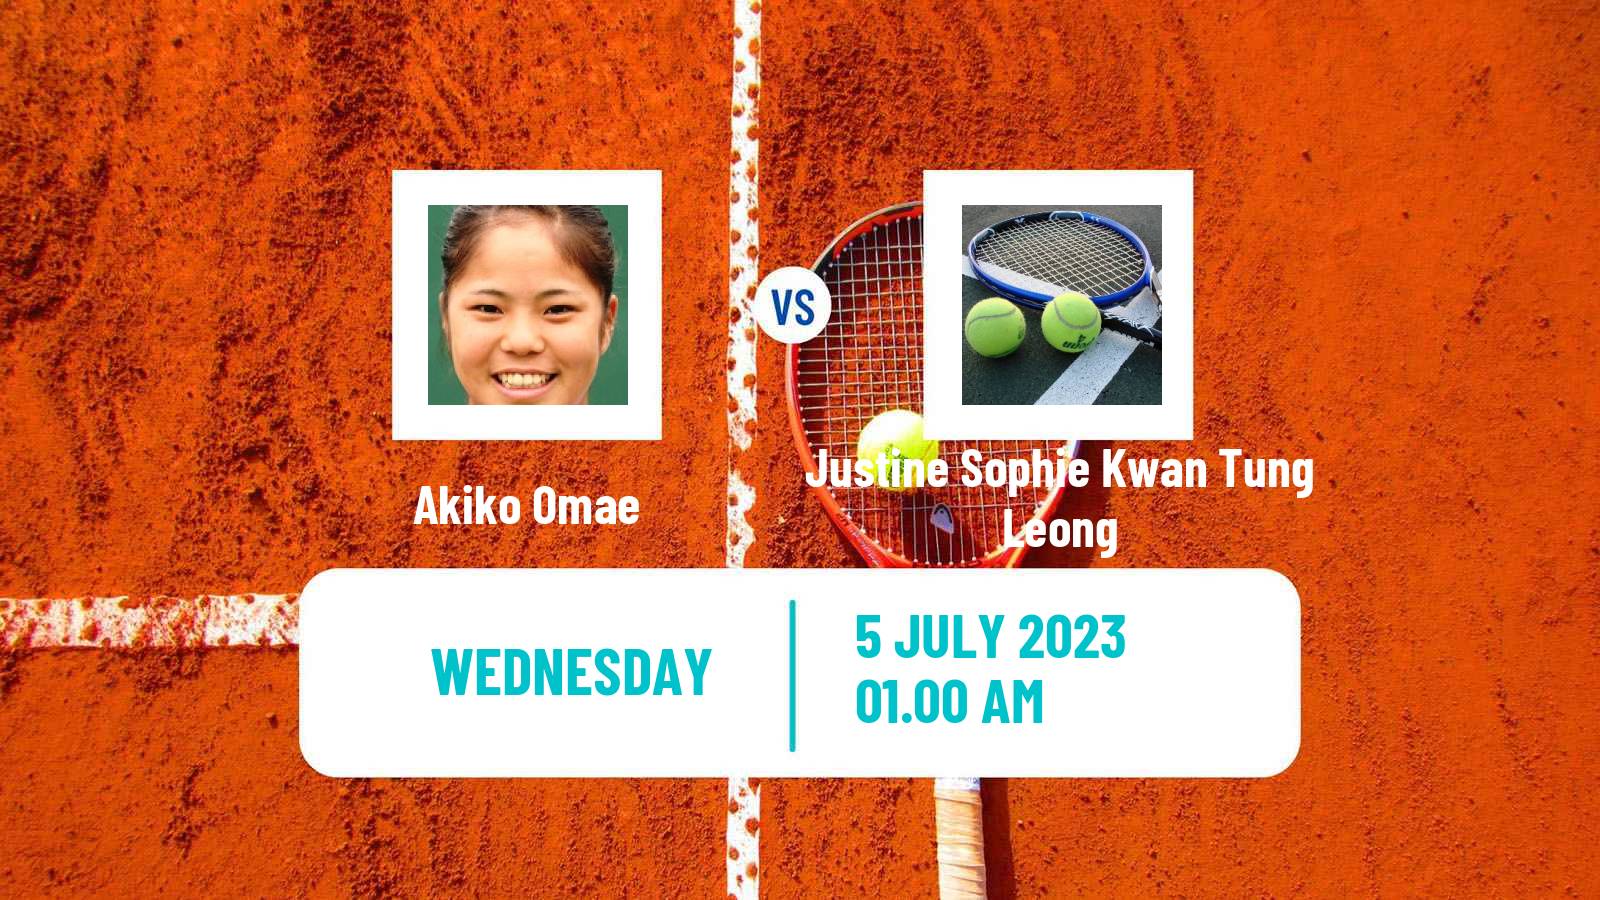 Tennis ITF W40 Hong Kong Women Akiko Omae - Justine Sophie Kwan Tung Leong